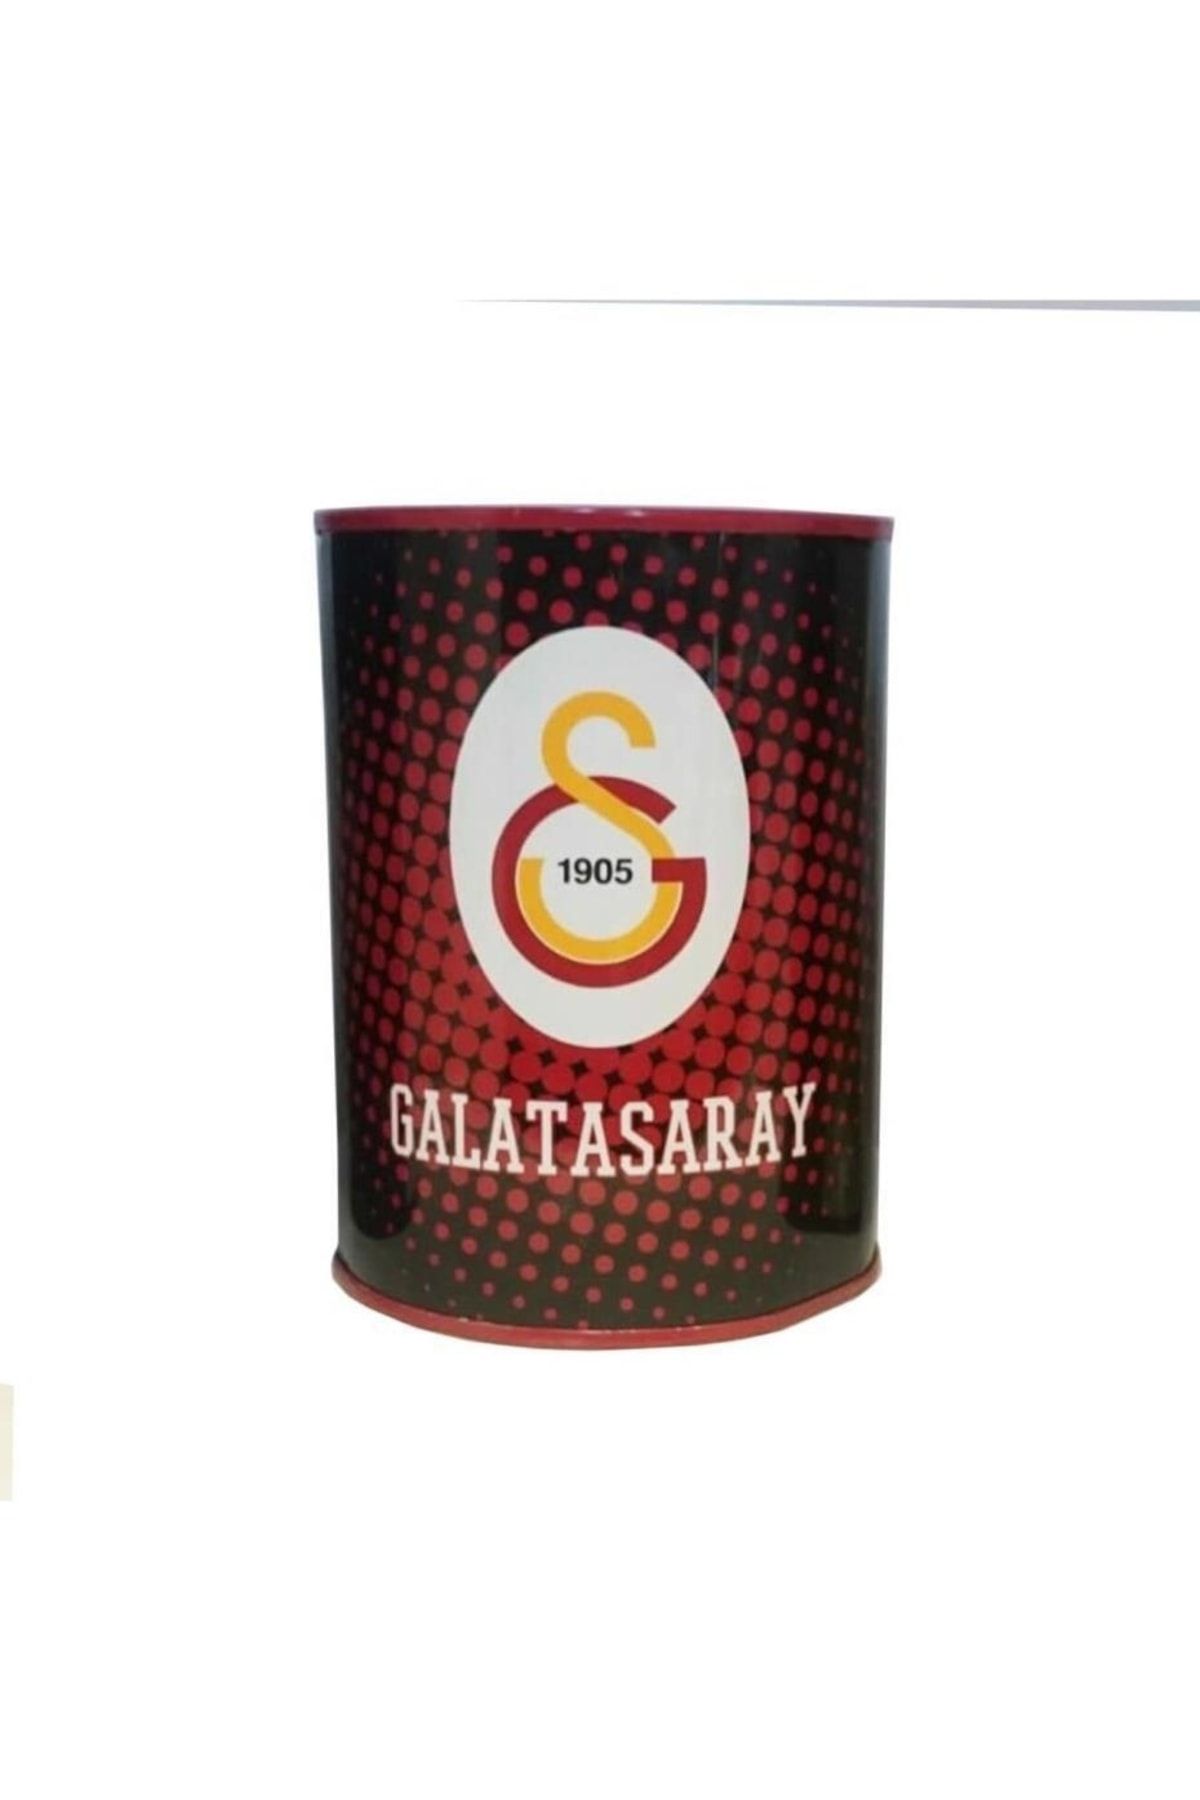 Galatasaray Tmn Taraftar Kumbara Galatasaray Küçük Asorti